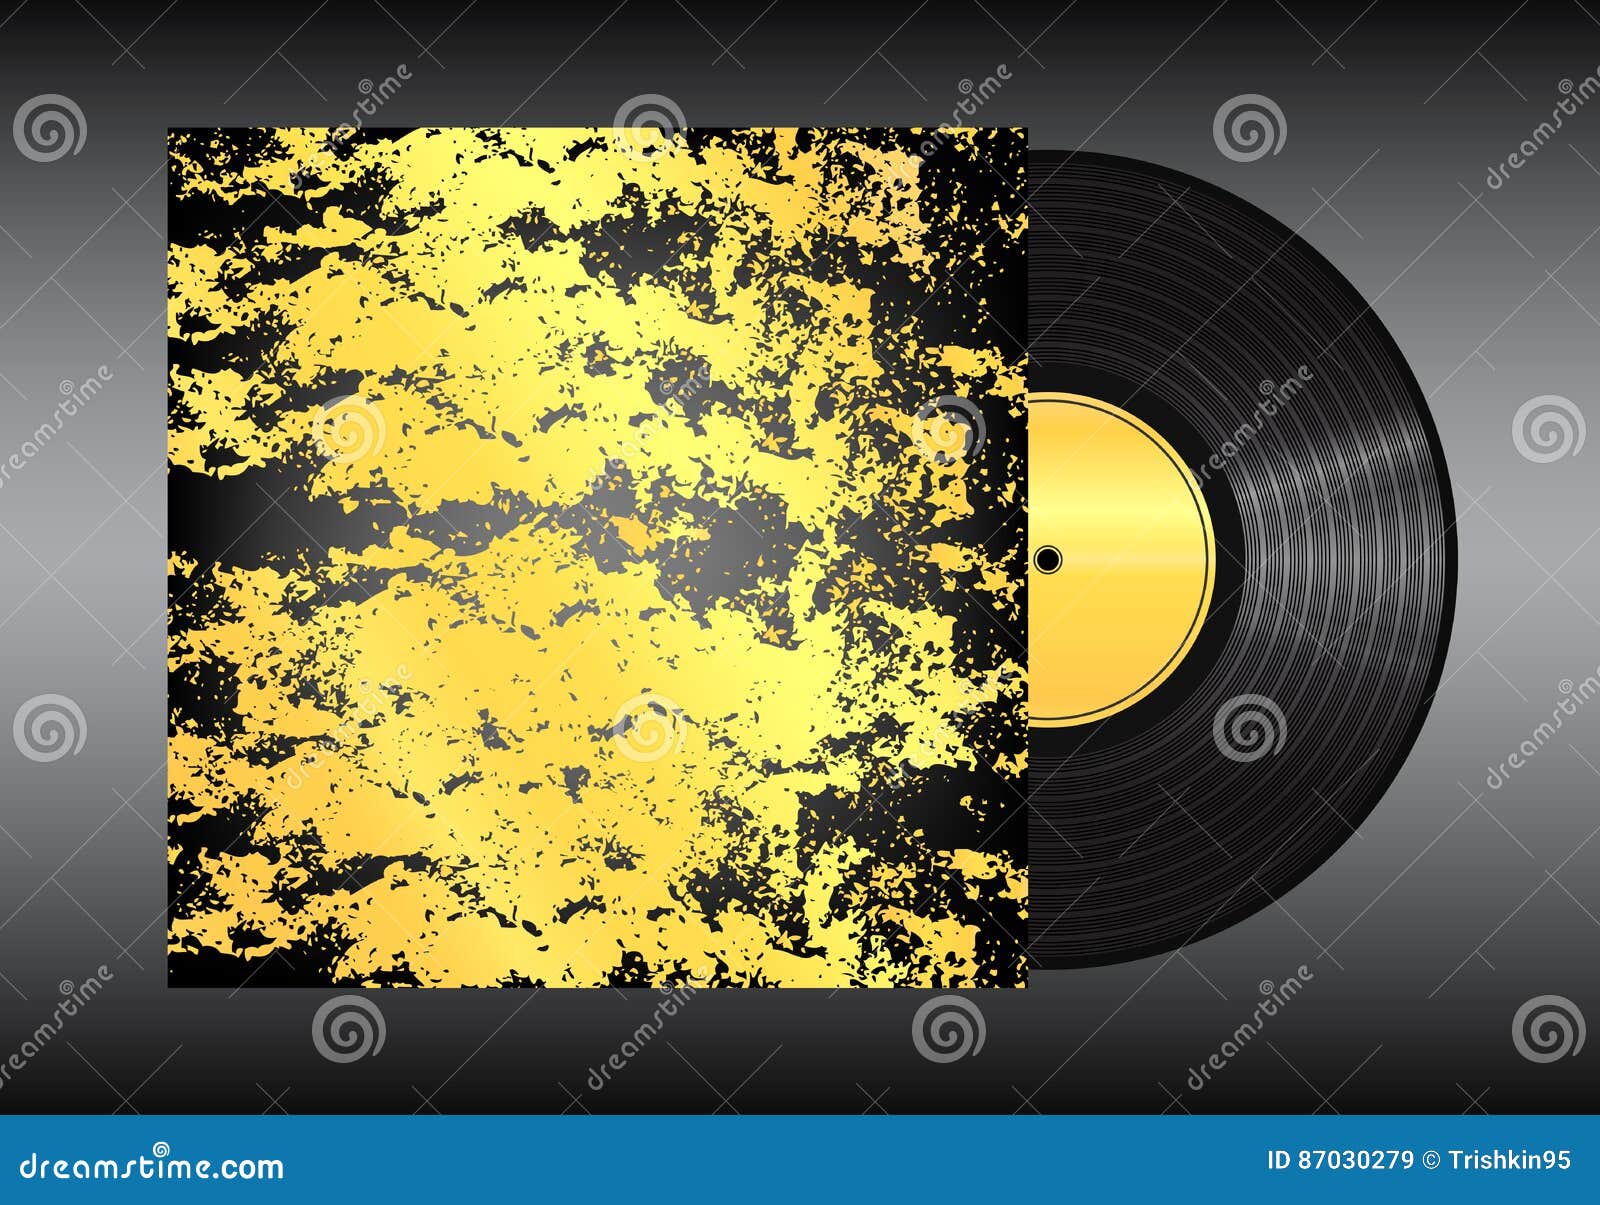 Vinyl Record on Black Background . Eps 10 Vector Illustration Stock